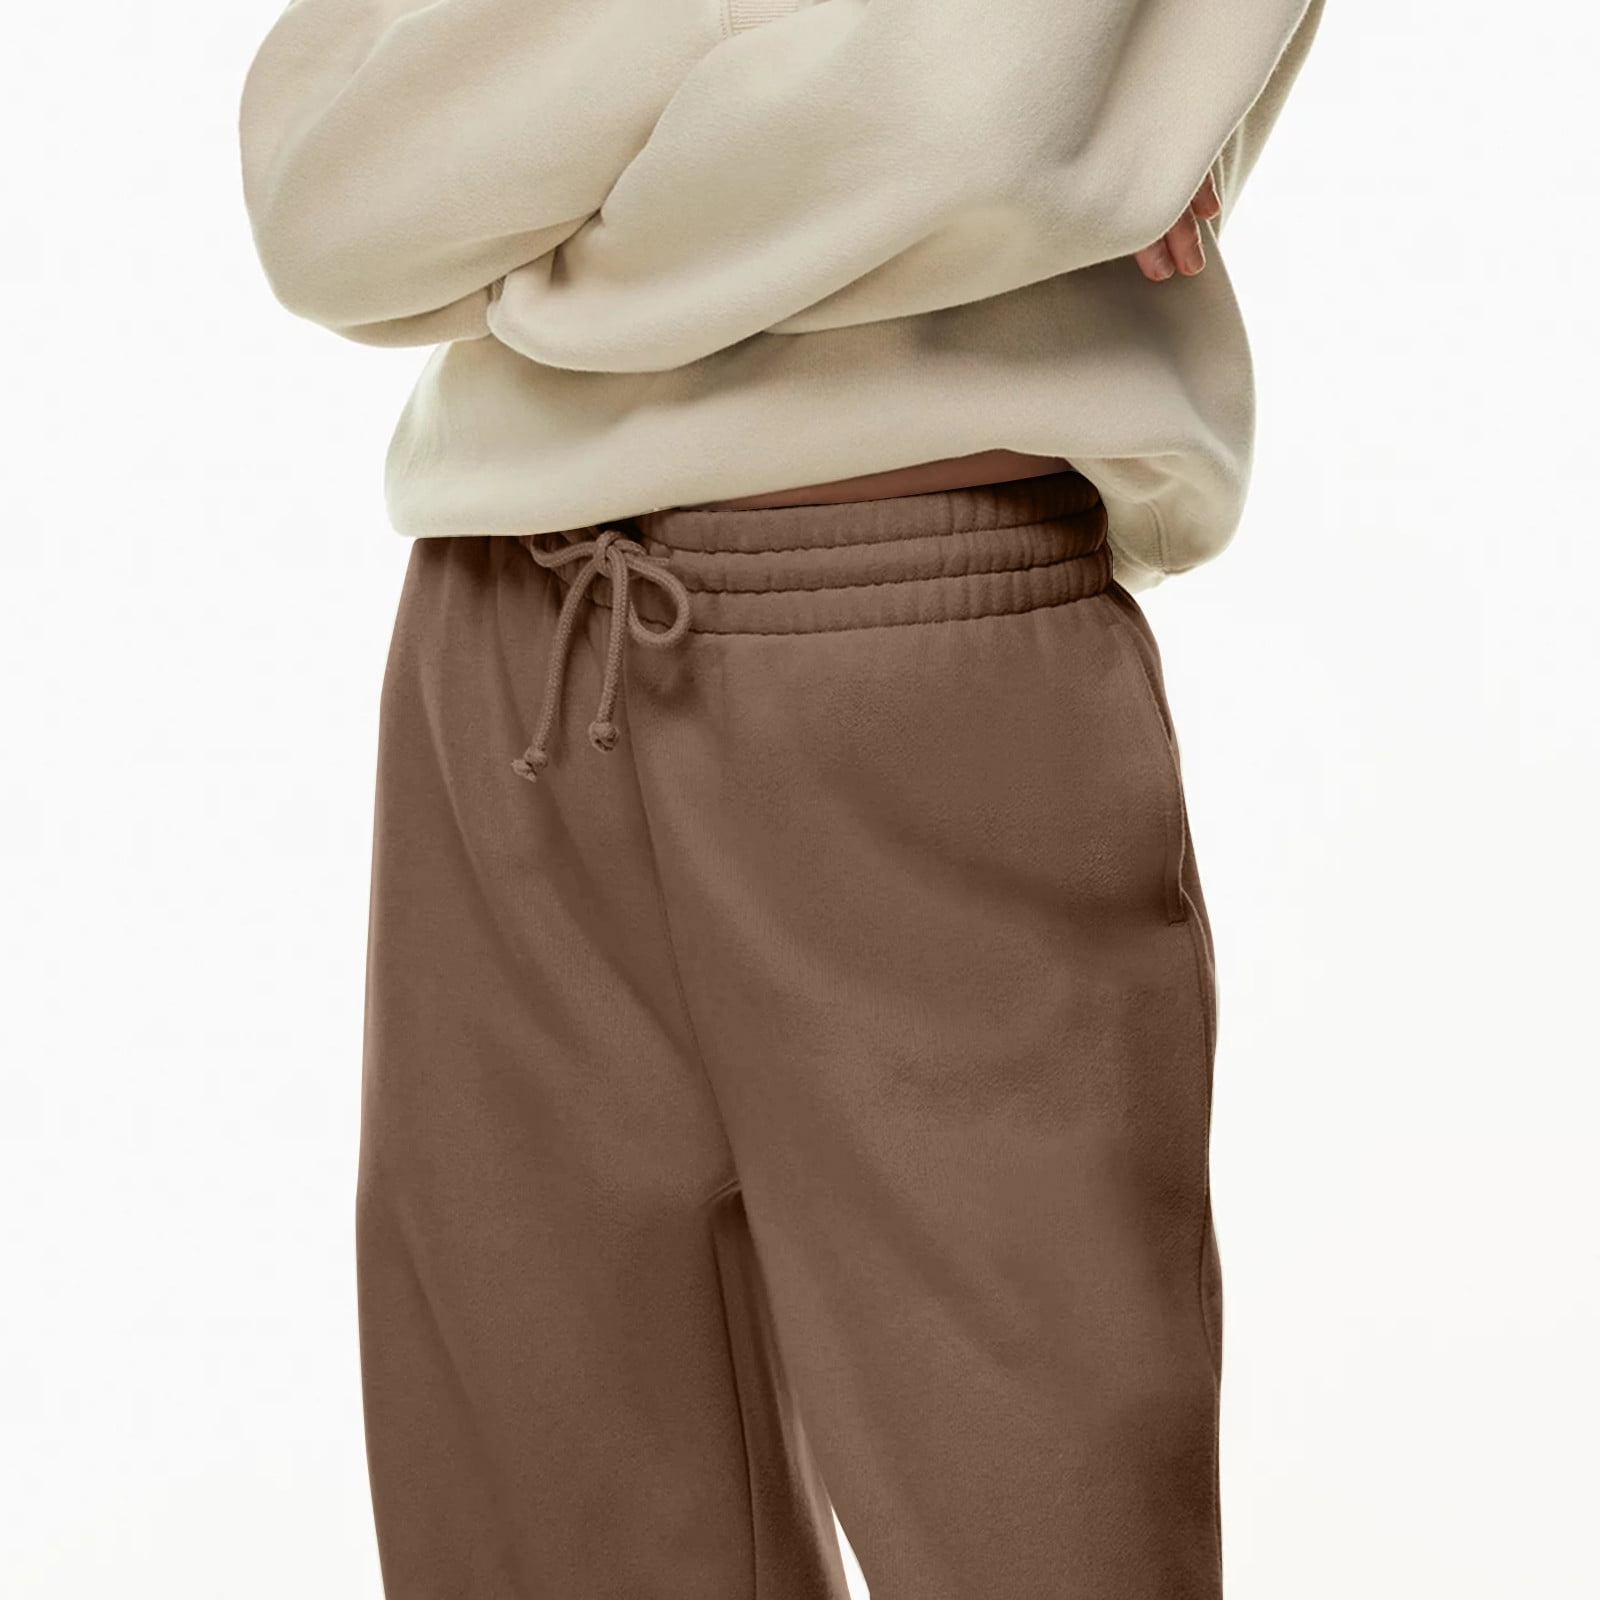 Susanny Petite Sweatpants Petite with Pockets Fleece Lined High